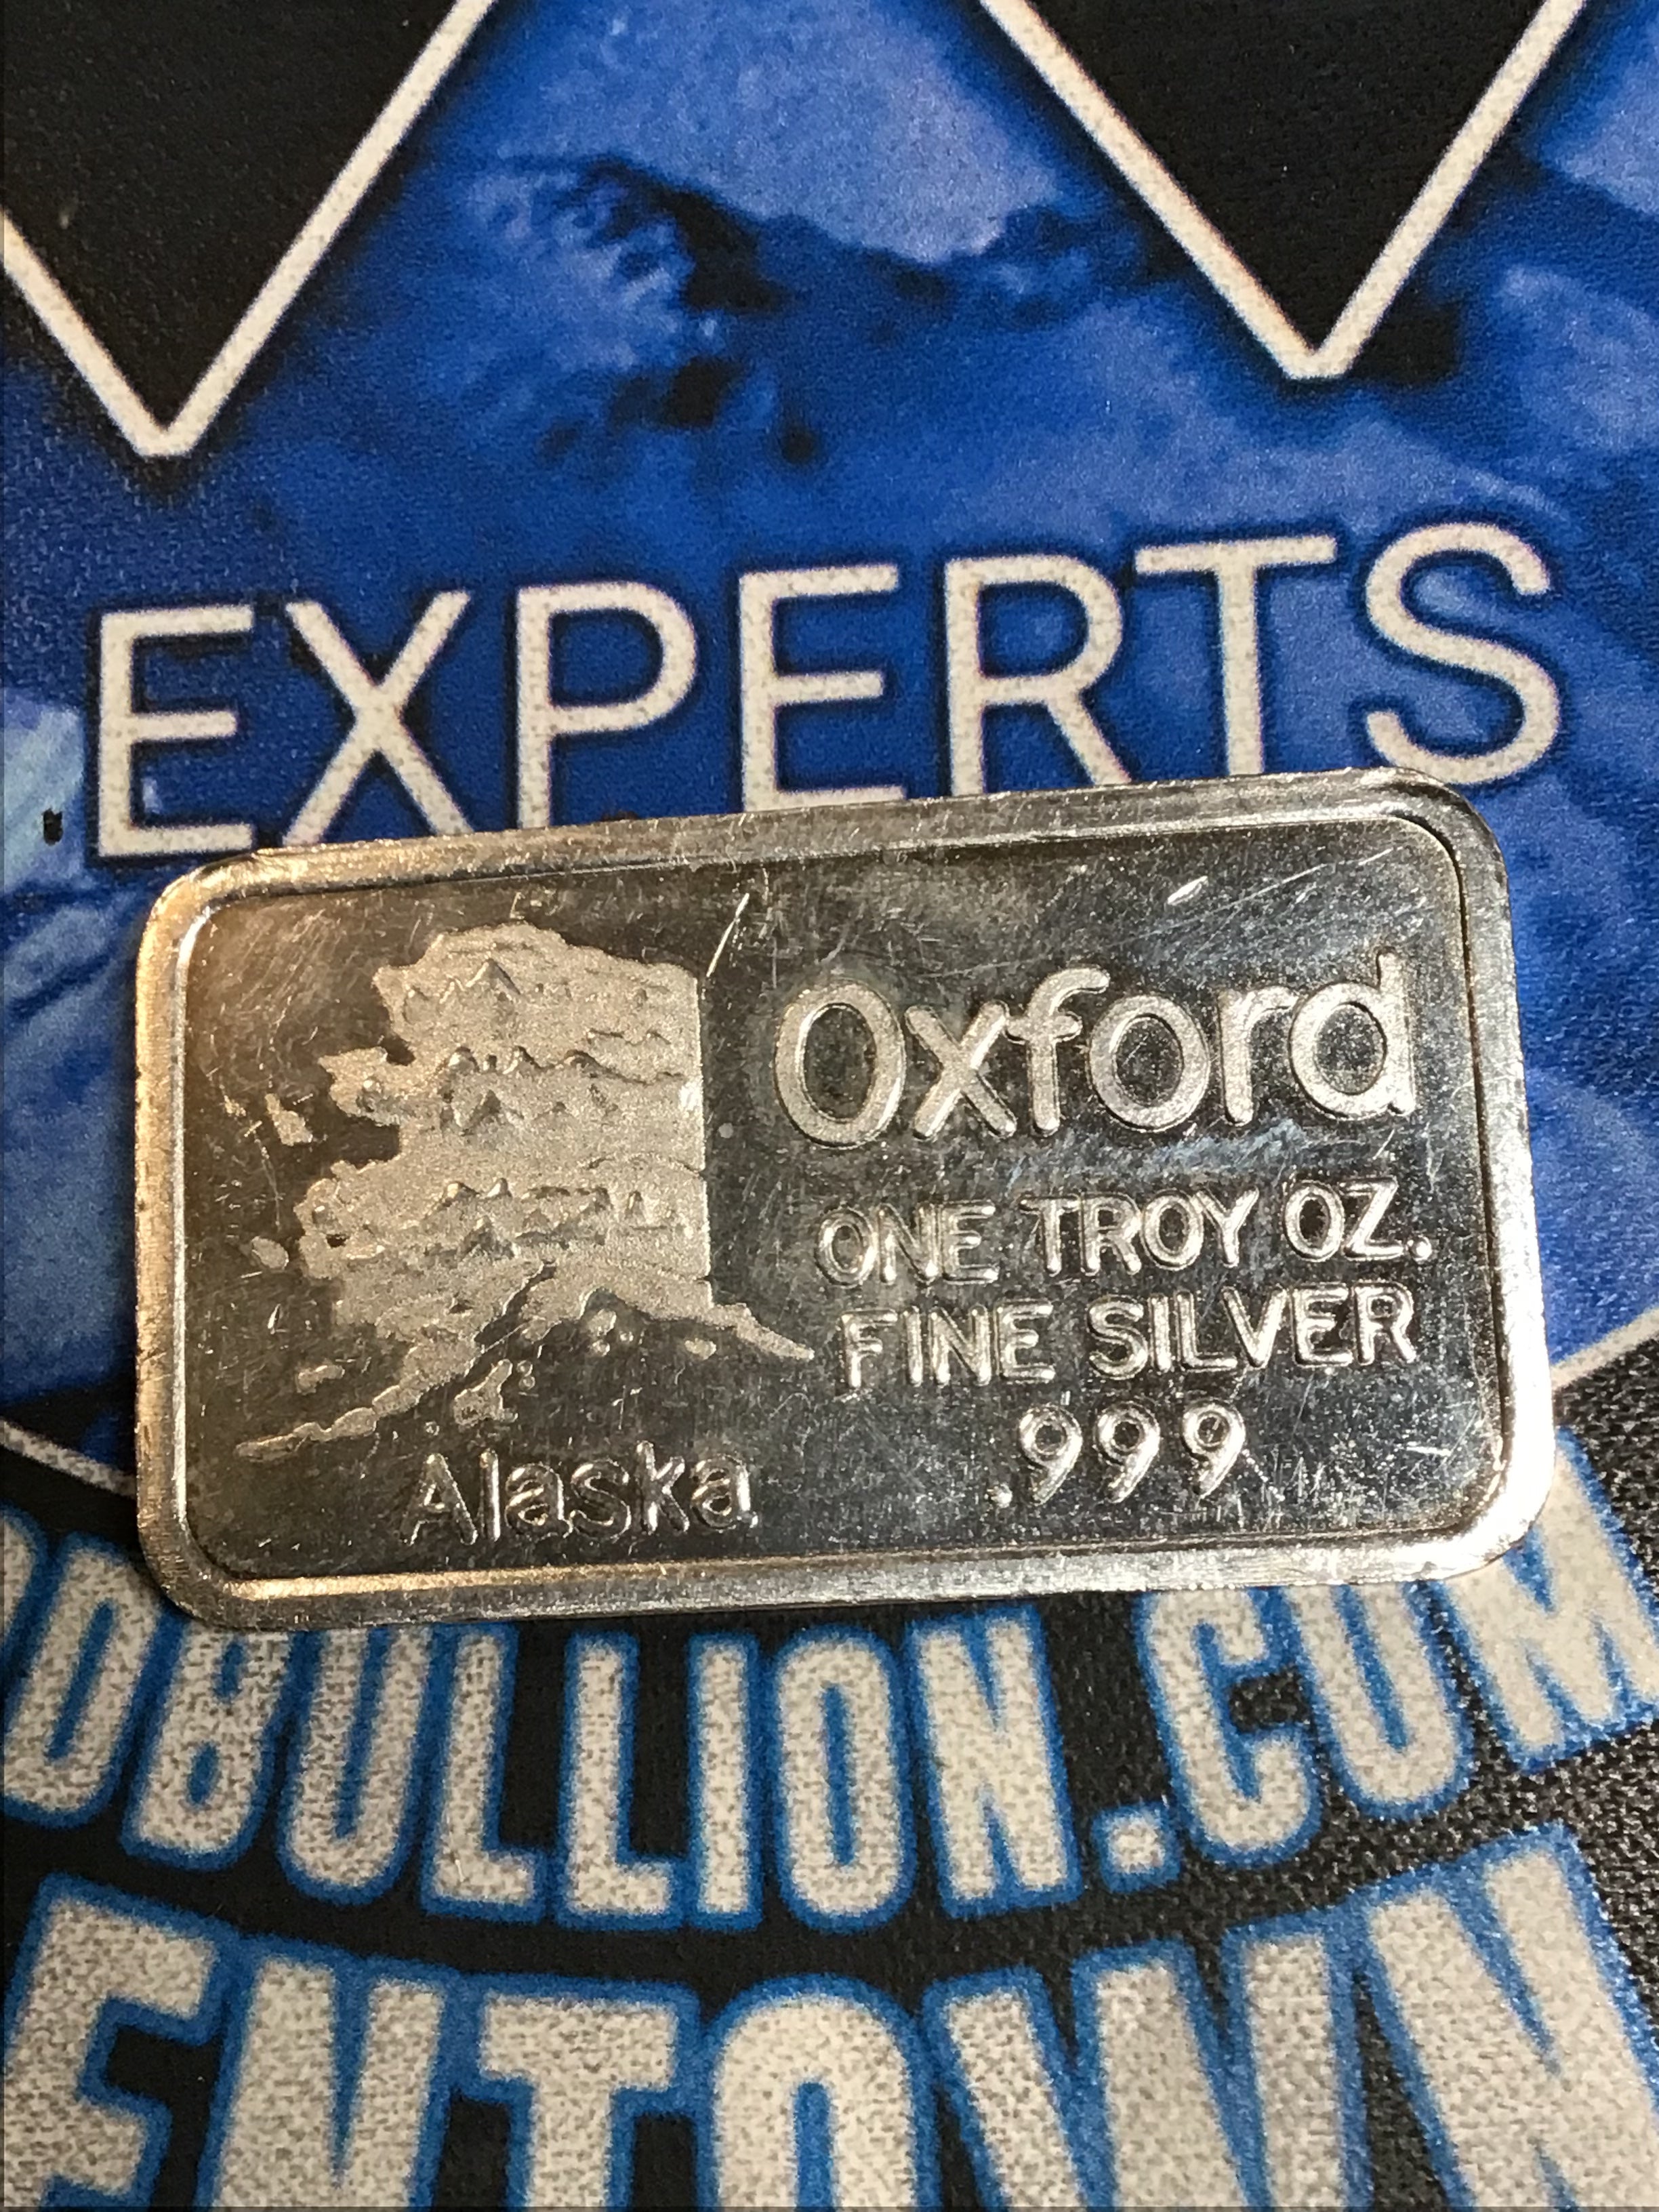 Oxford Assayers and Refining Big Dipper 1 oz. Fine Silver Bar- .999